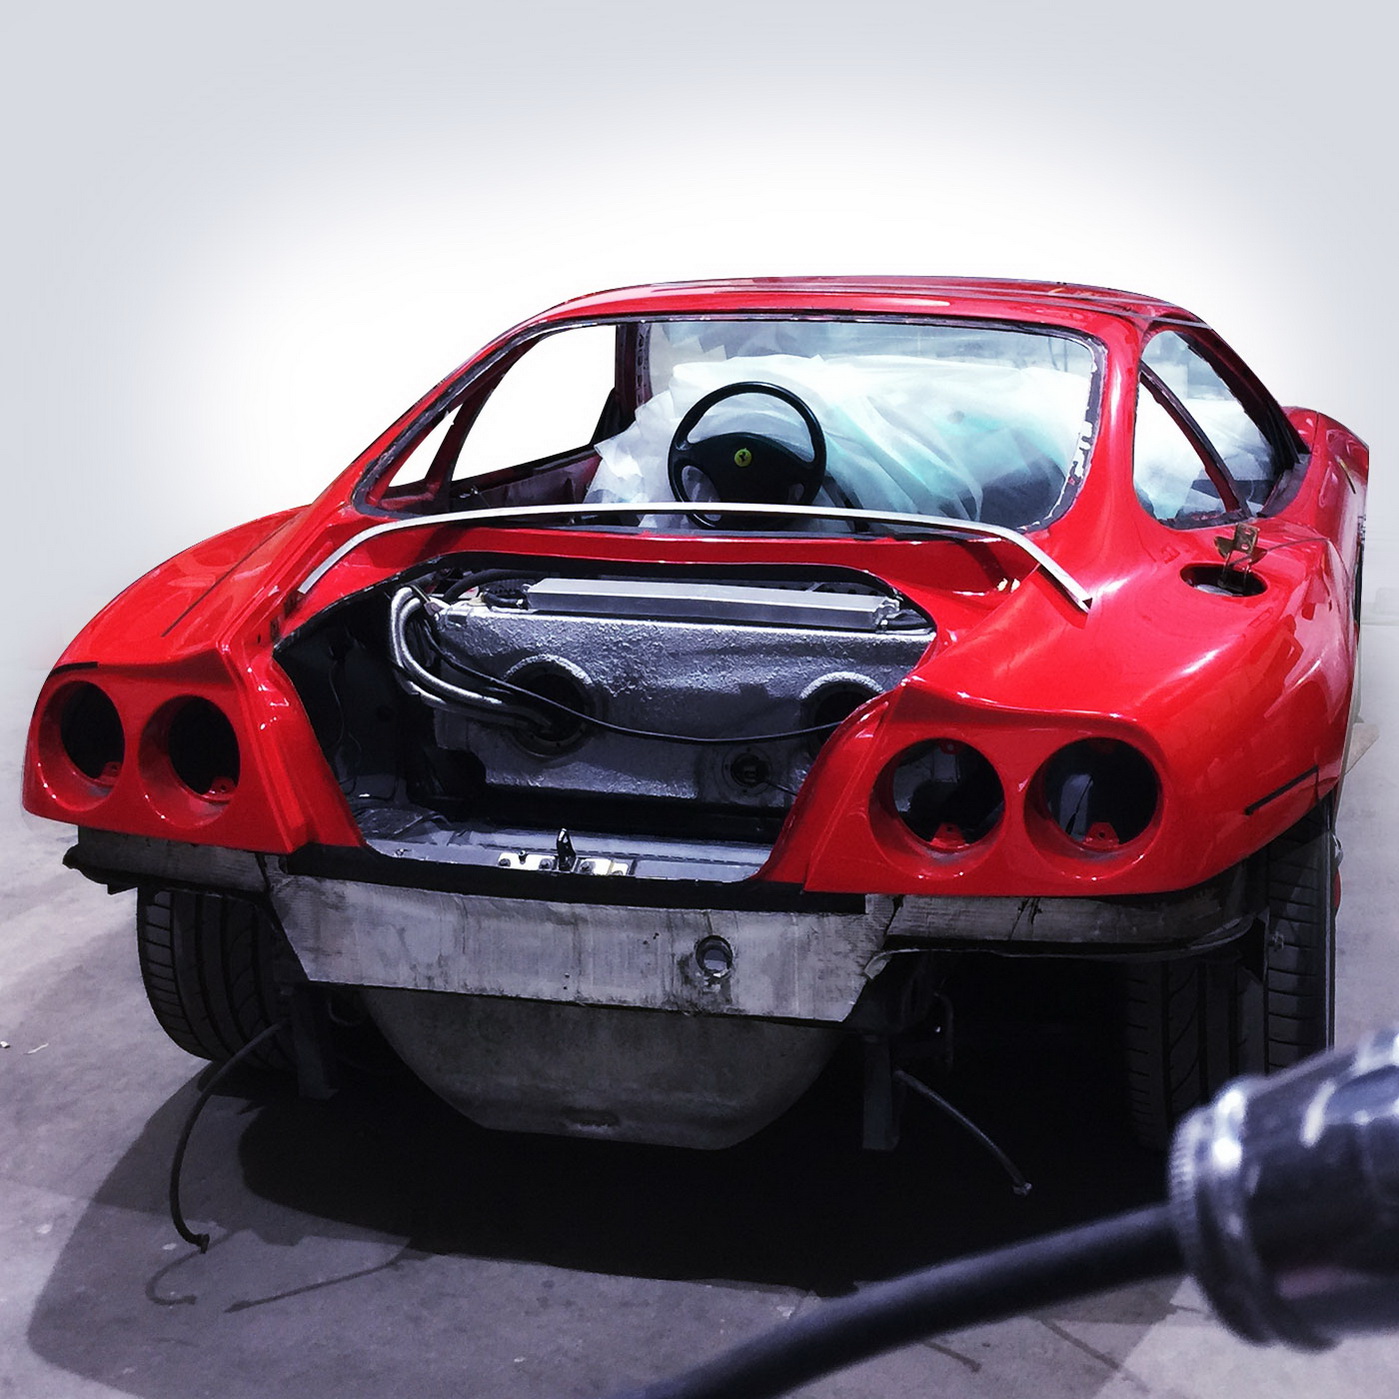 Ferrari Breadvan Hommage Under Development Based On A 550 Maranello